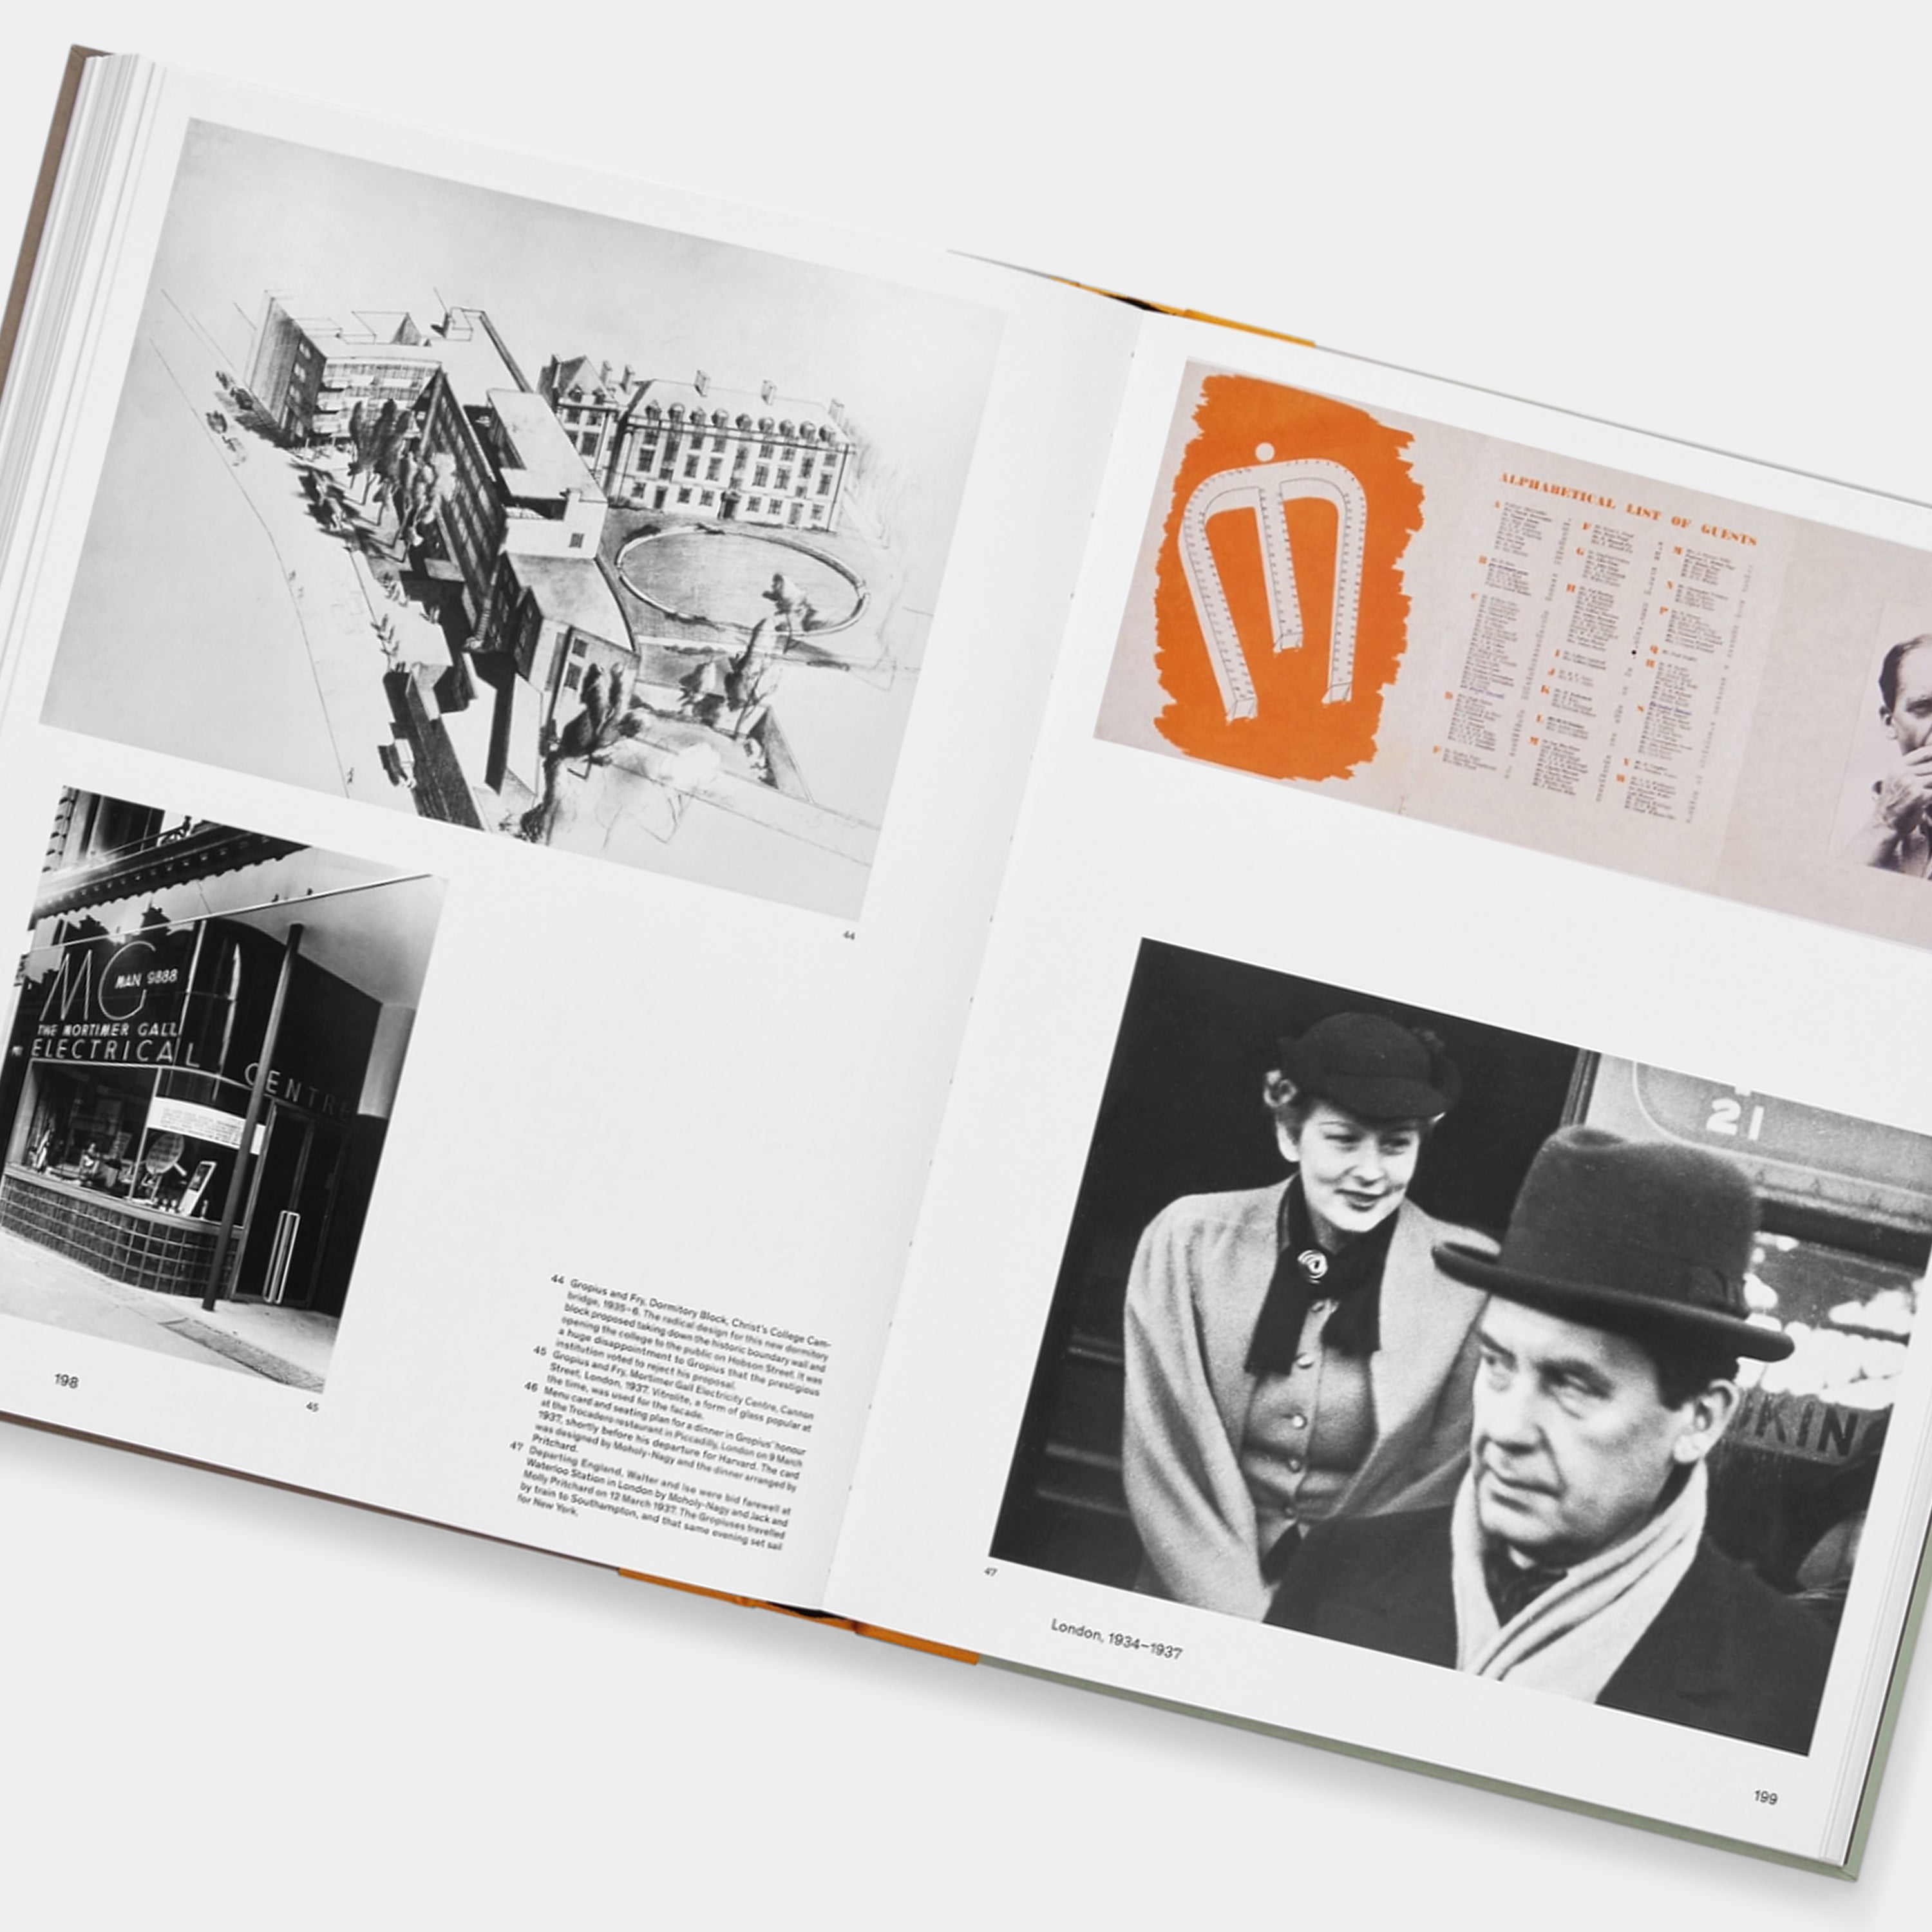 Walter Gropius: An Illustrated Biography Phaidon Book